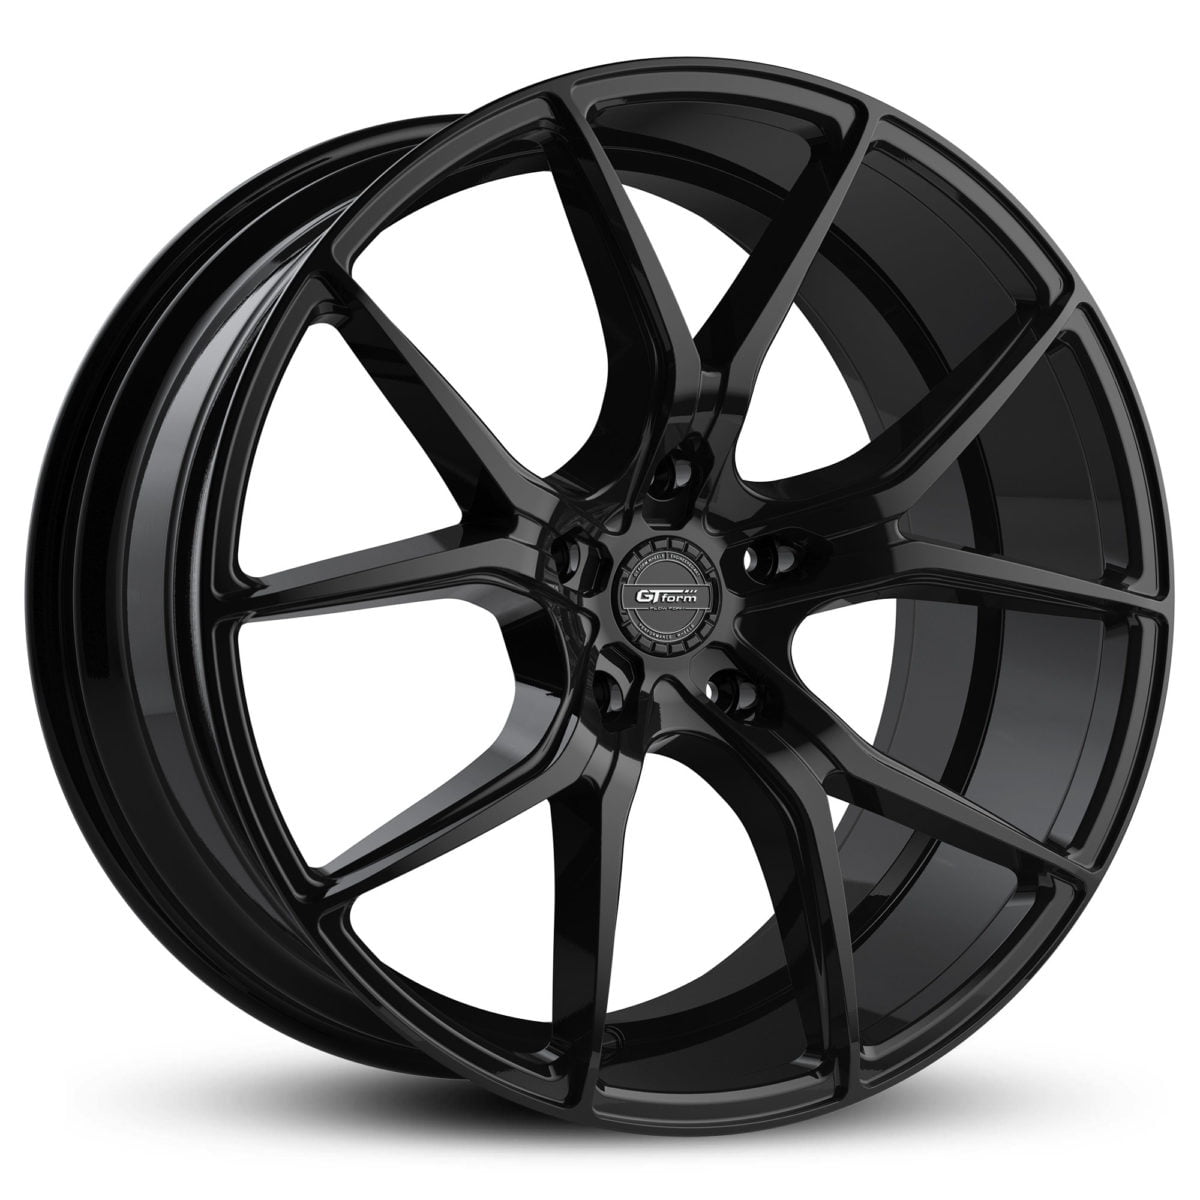 GT Form Venom Gloss Black Rims Performance Wheels